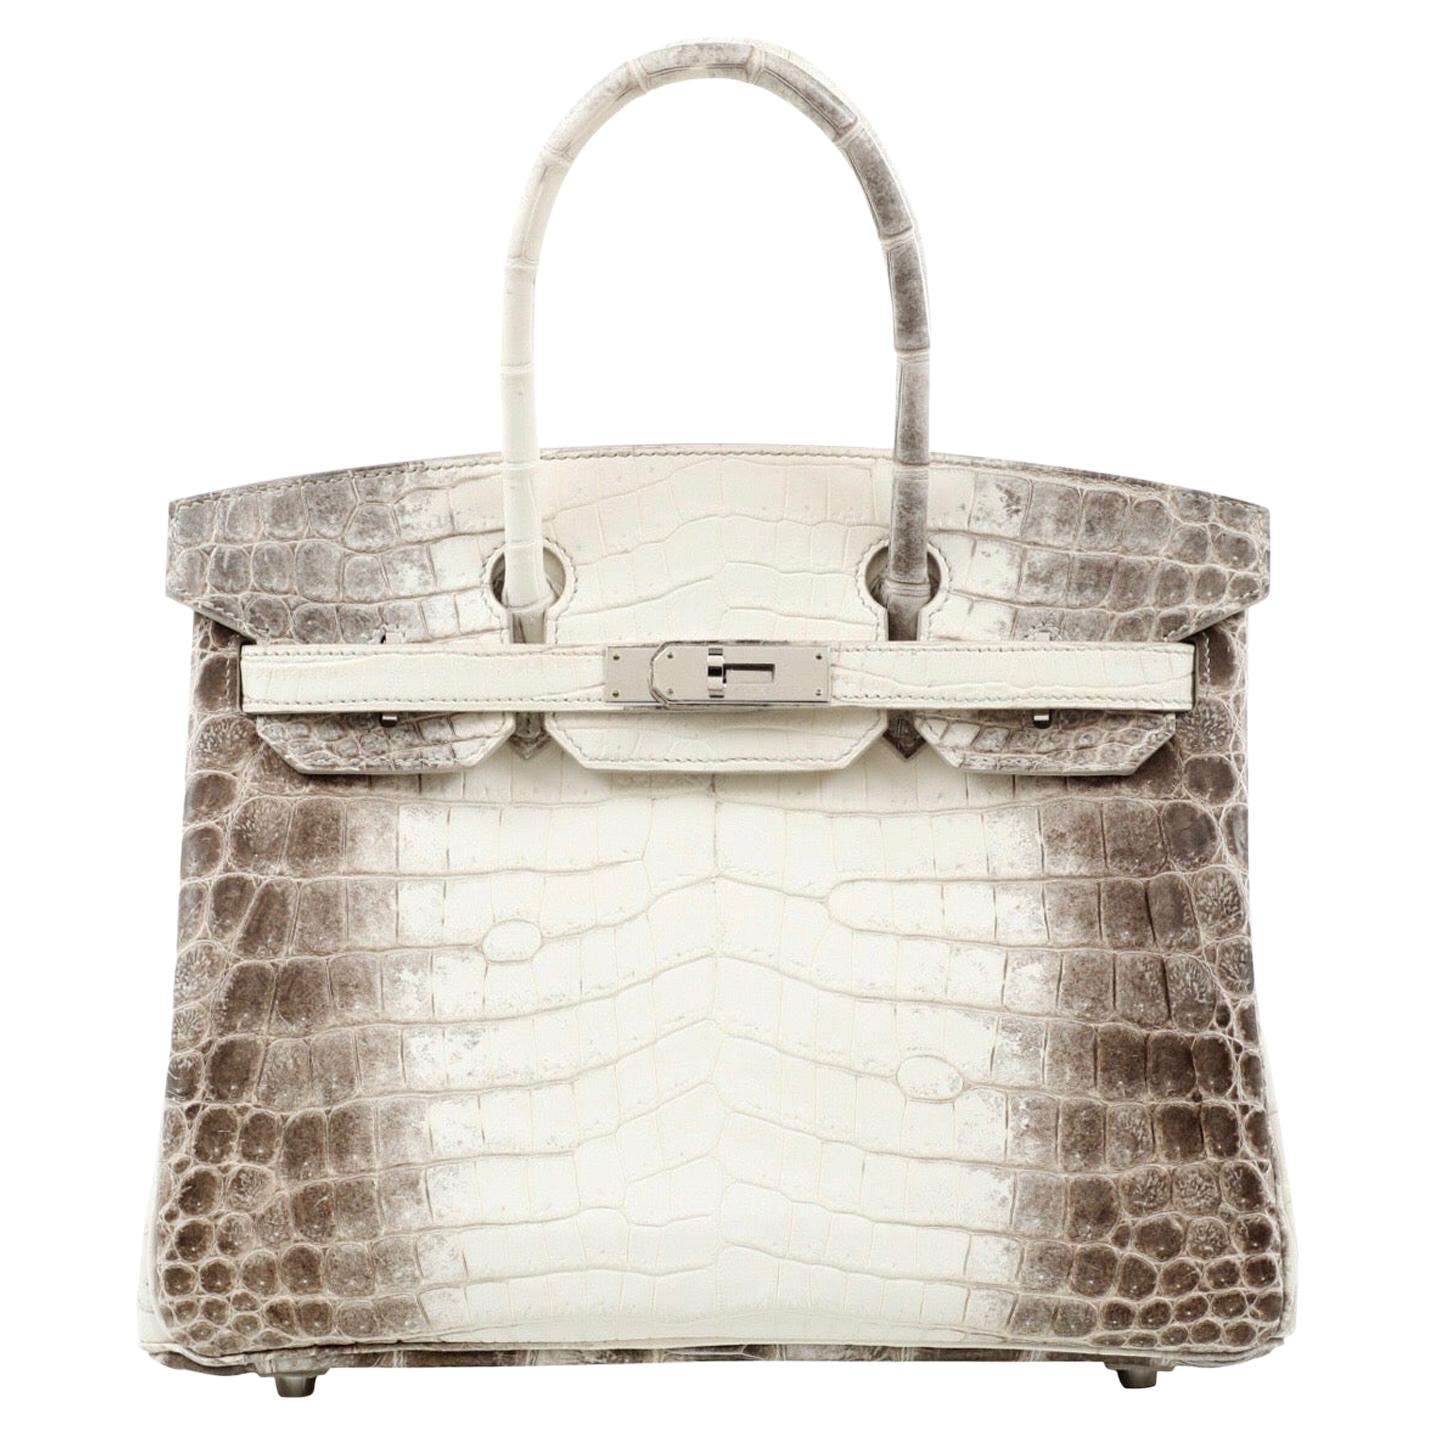 Hermès Himalayan 30 cm Crocodile Birkin Bag